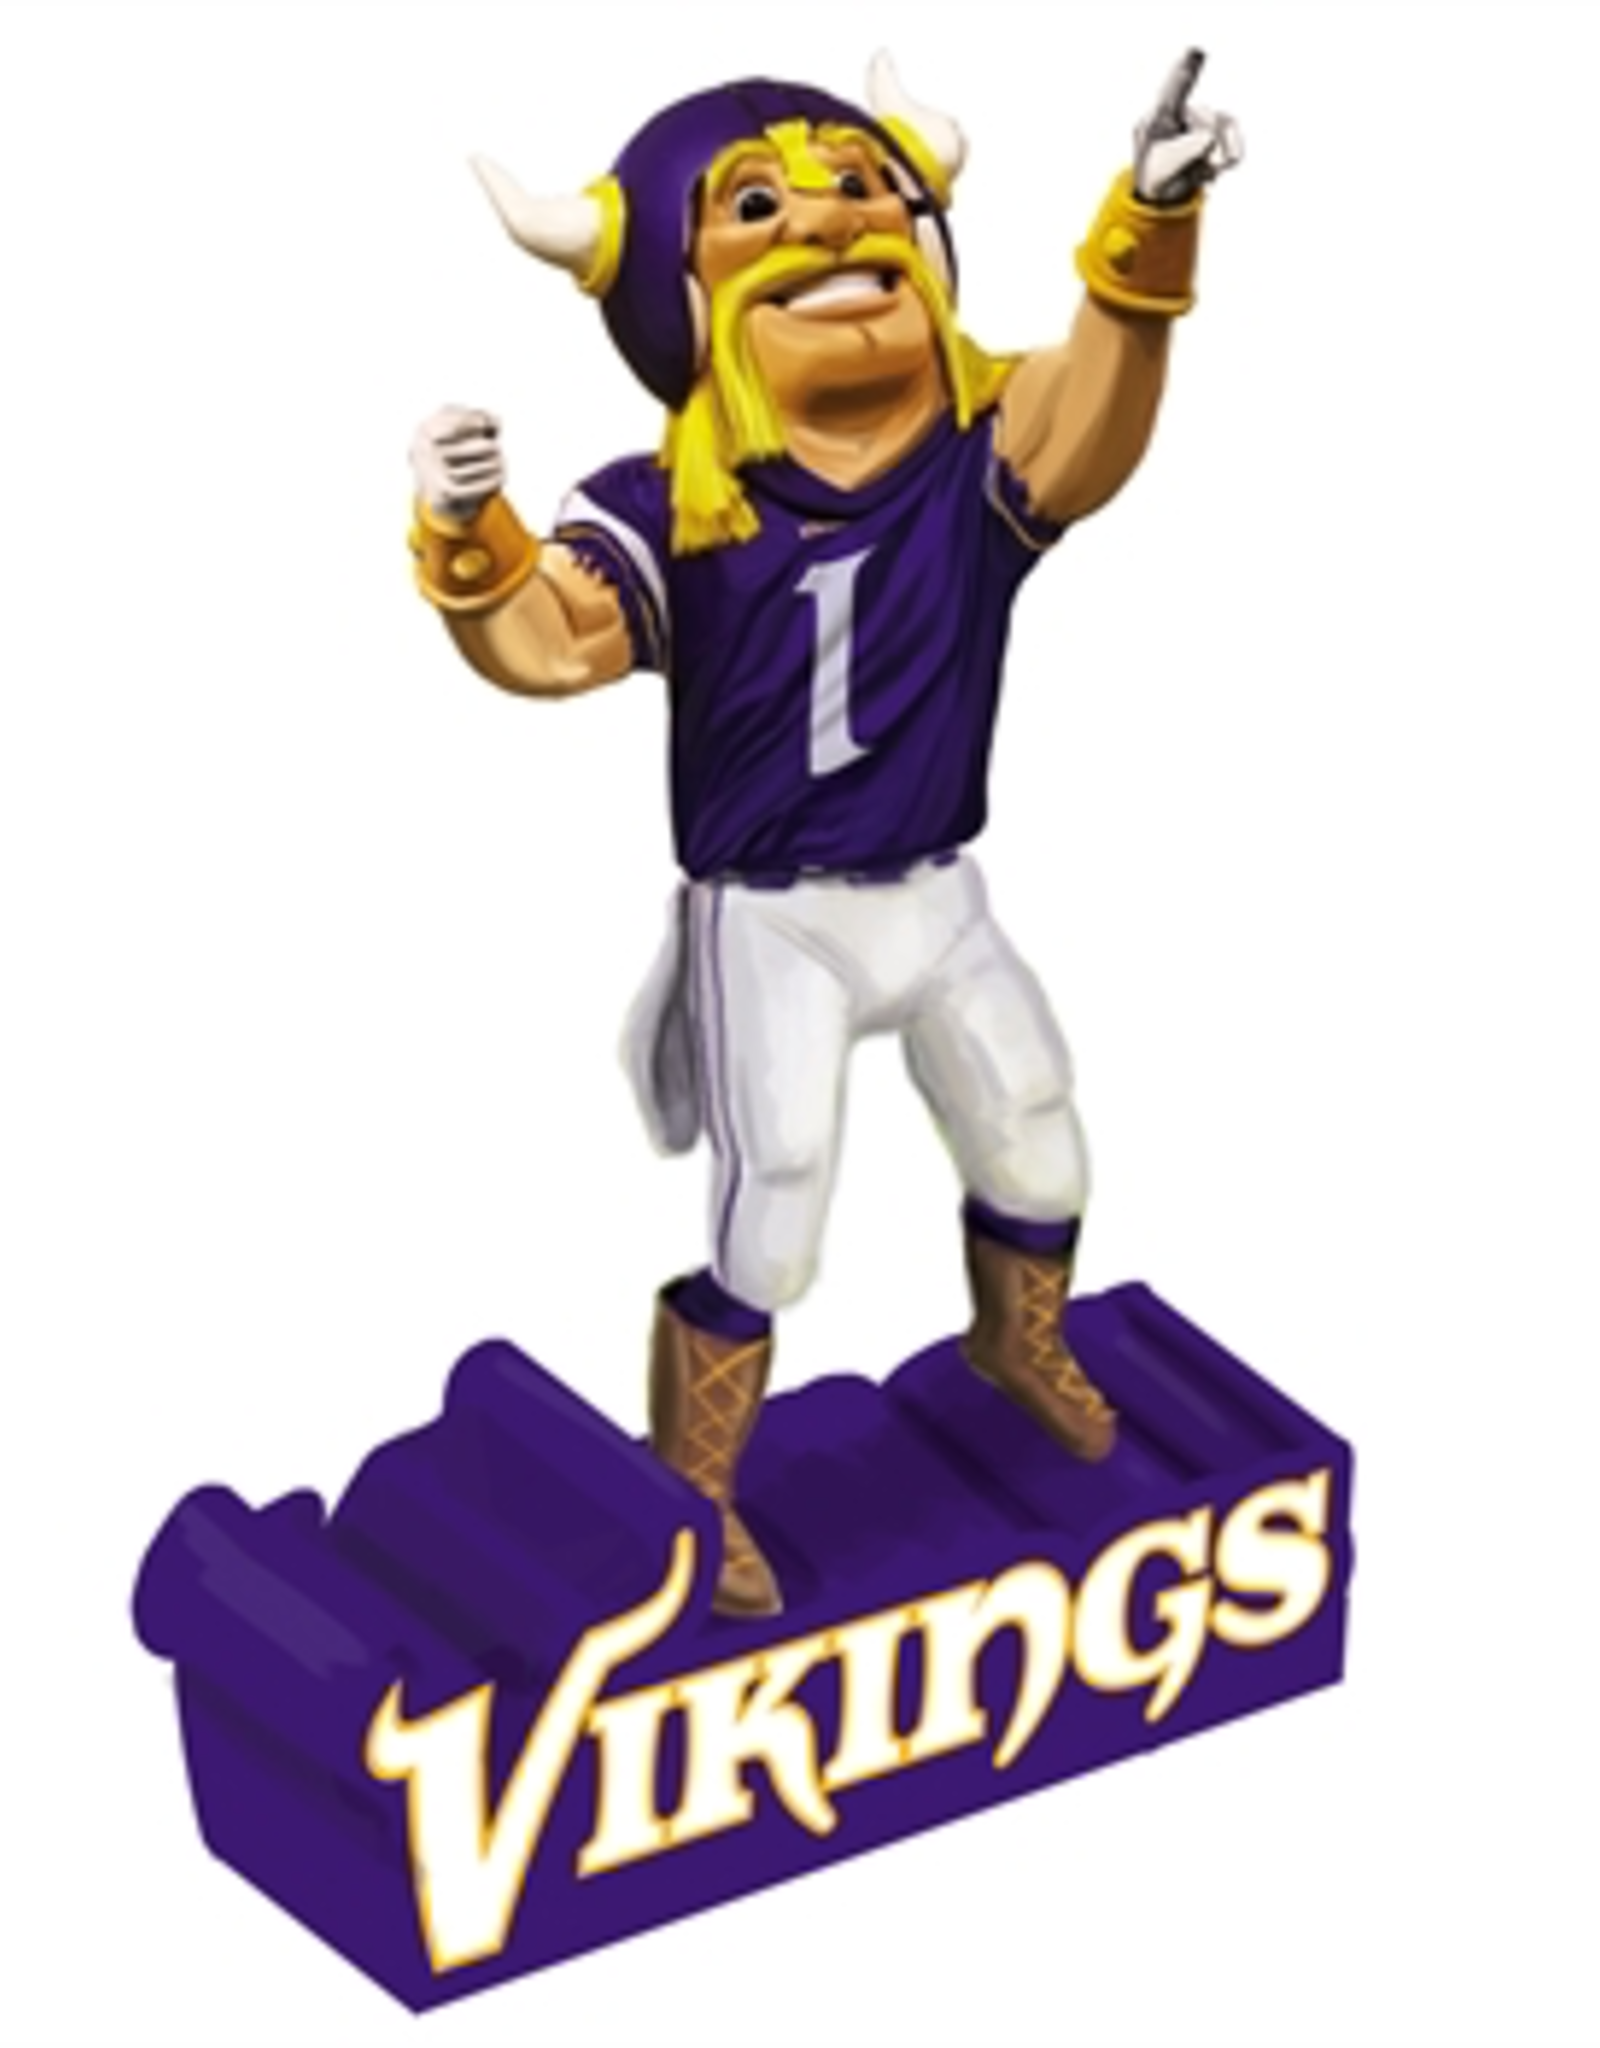 EVERGREEN Minnesota Vikings Mascot Statue